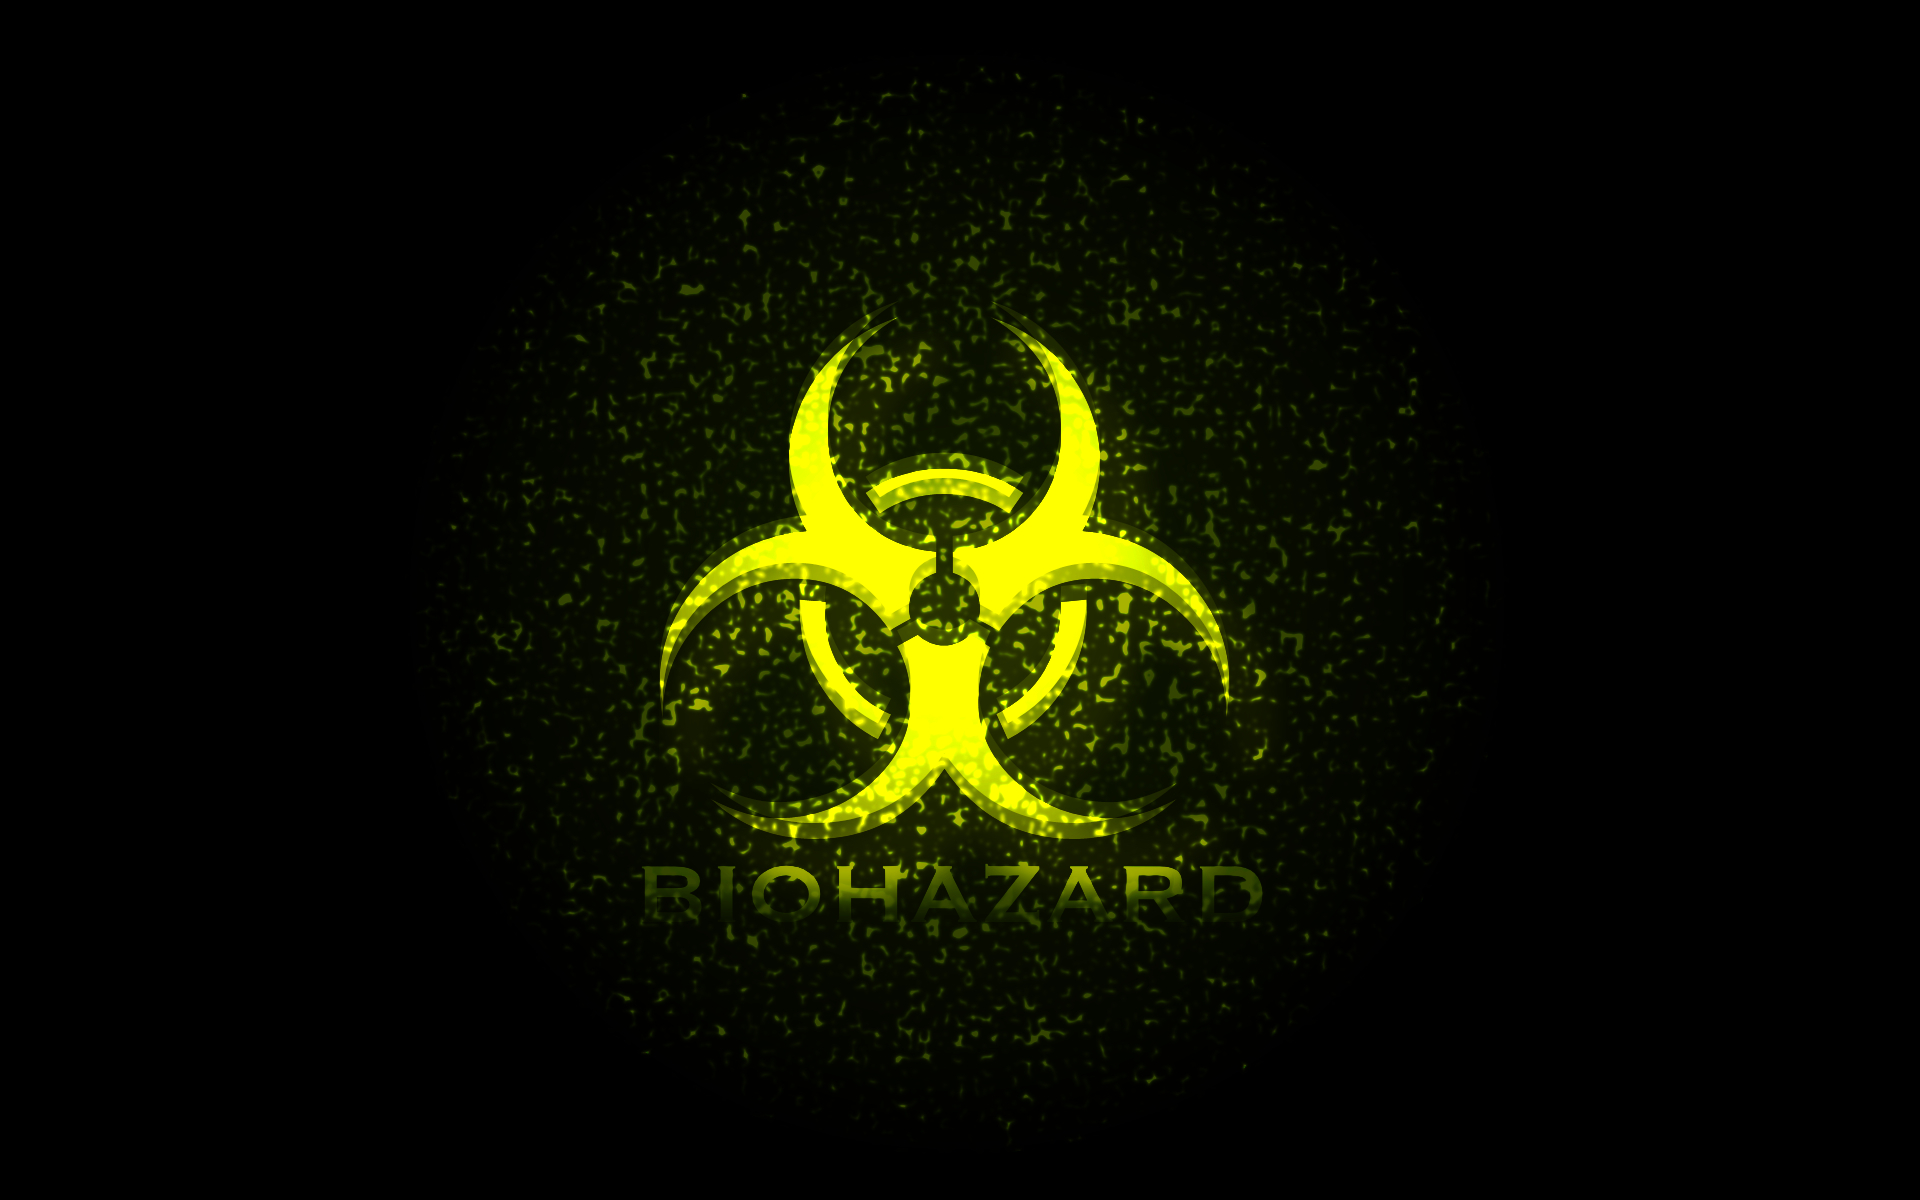 Biohazard Wallpaper Image Amp Pictures Becuo